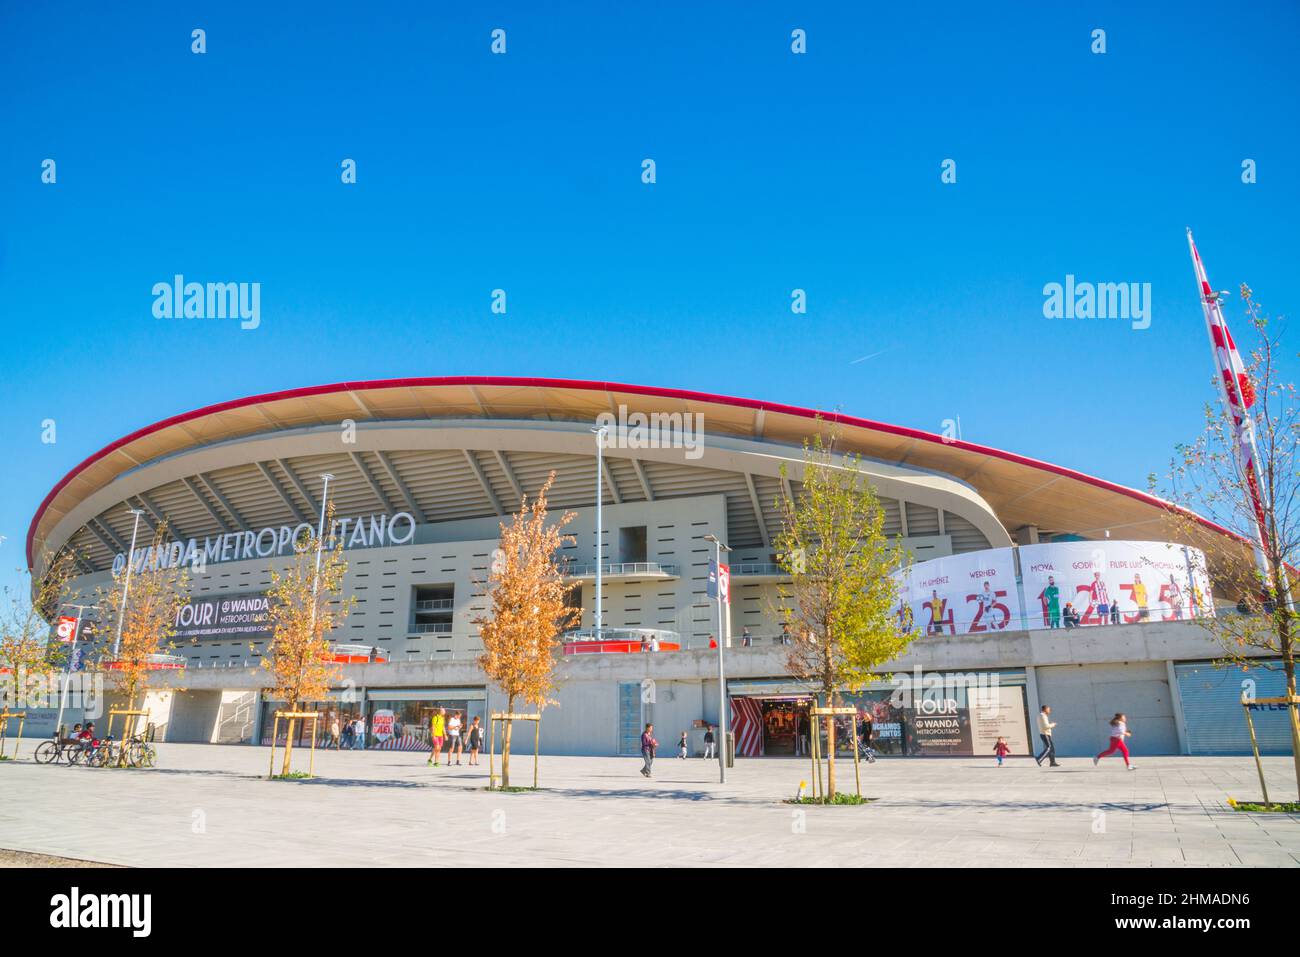 Wanda metropolitano stadion hi-res stock photography and images - Alamy